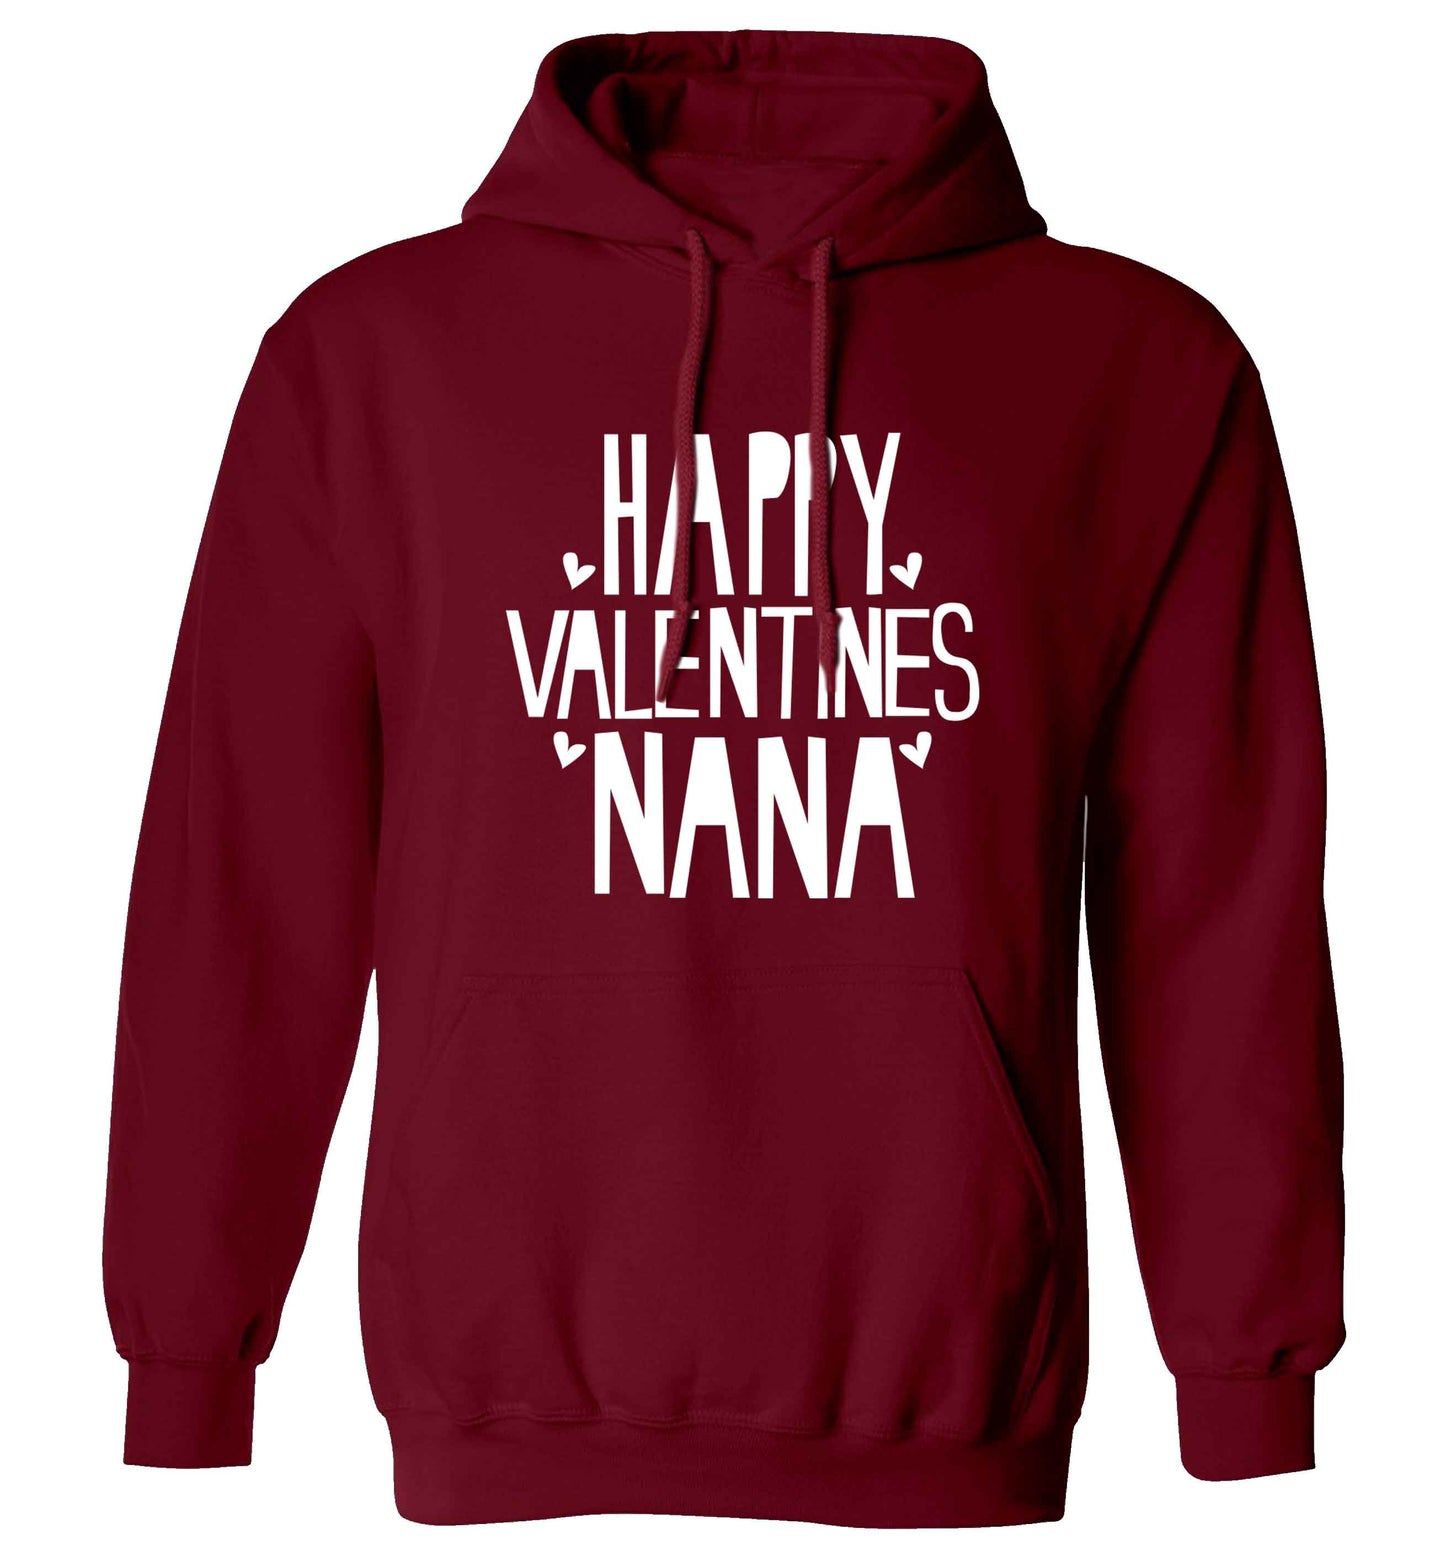 Happy valentines nana adults unisex maroon hoodie 2XL